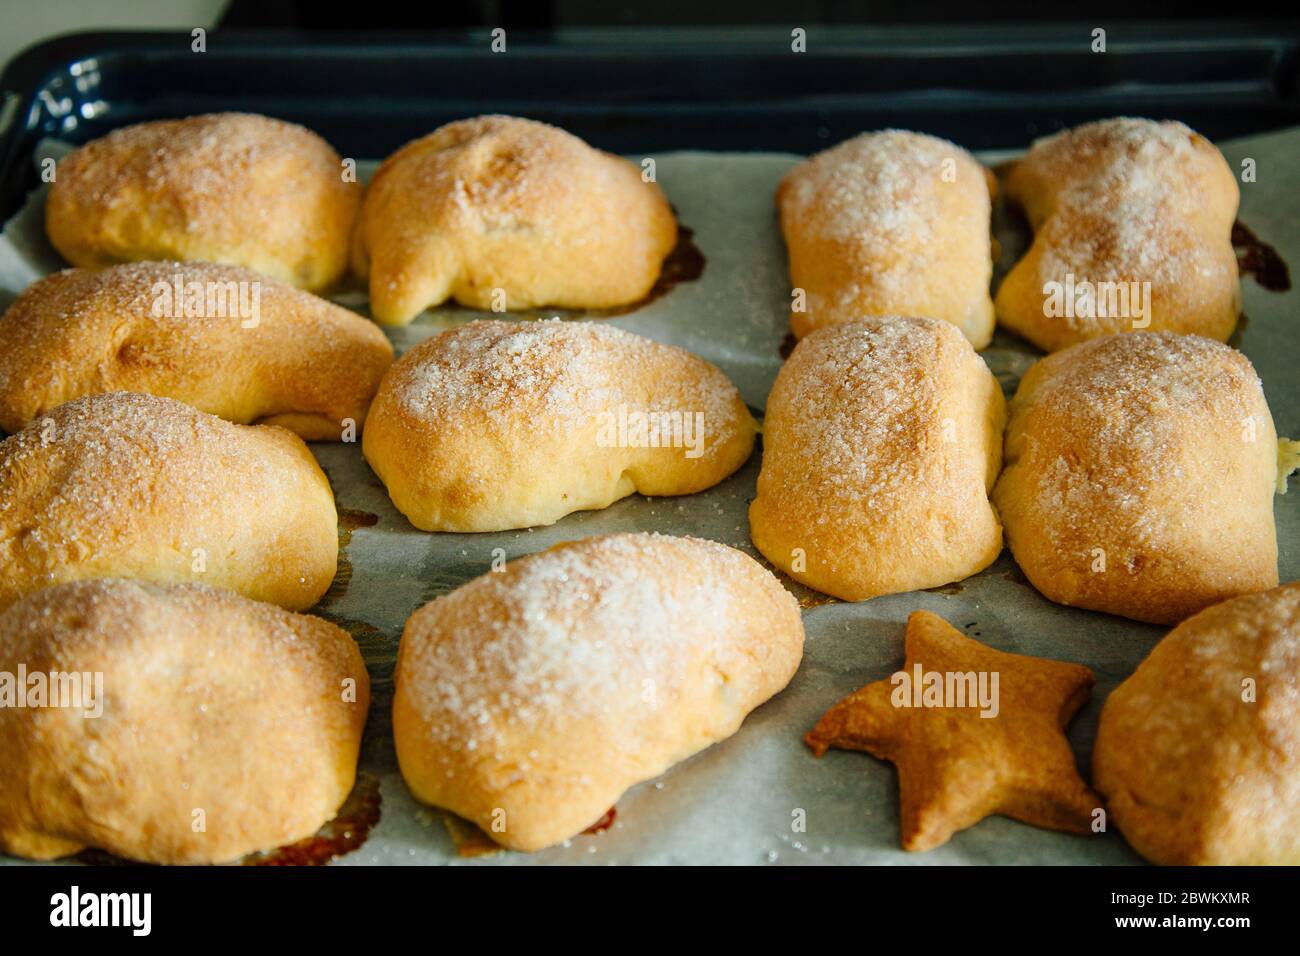 Russian pirozhki baked patties stuffed with apples Stock Photo